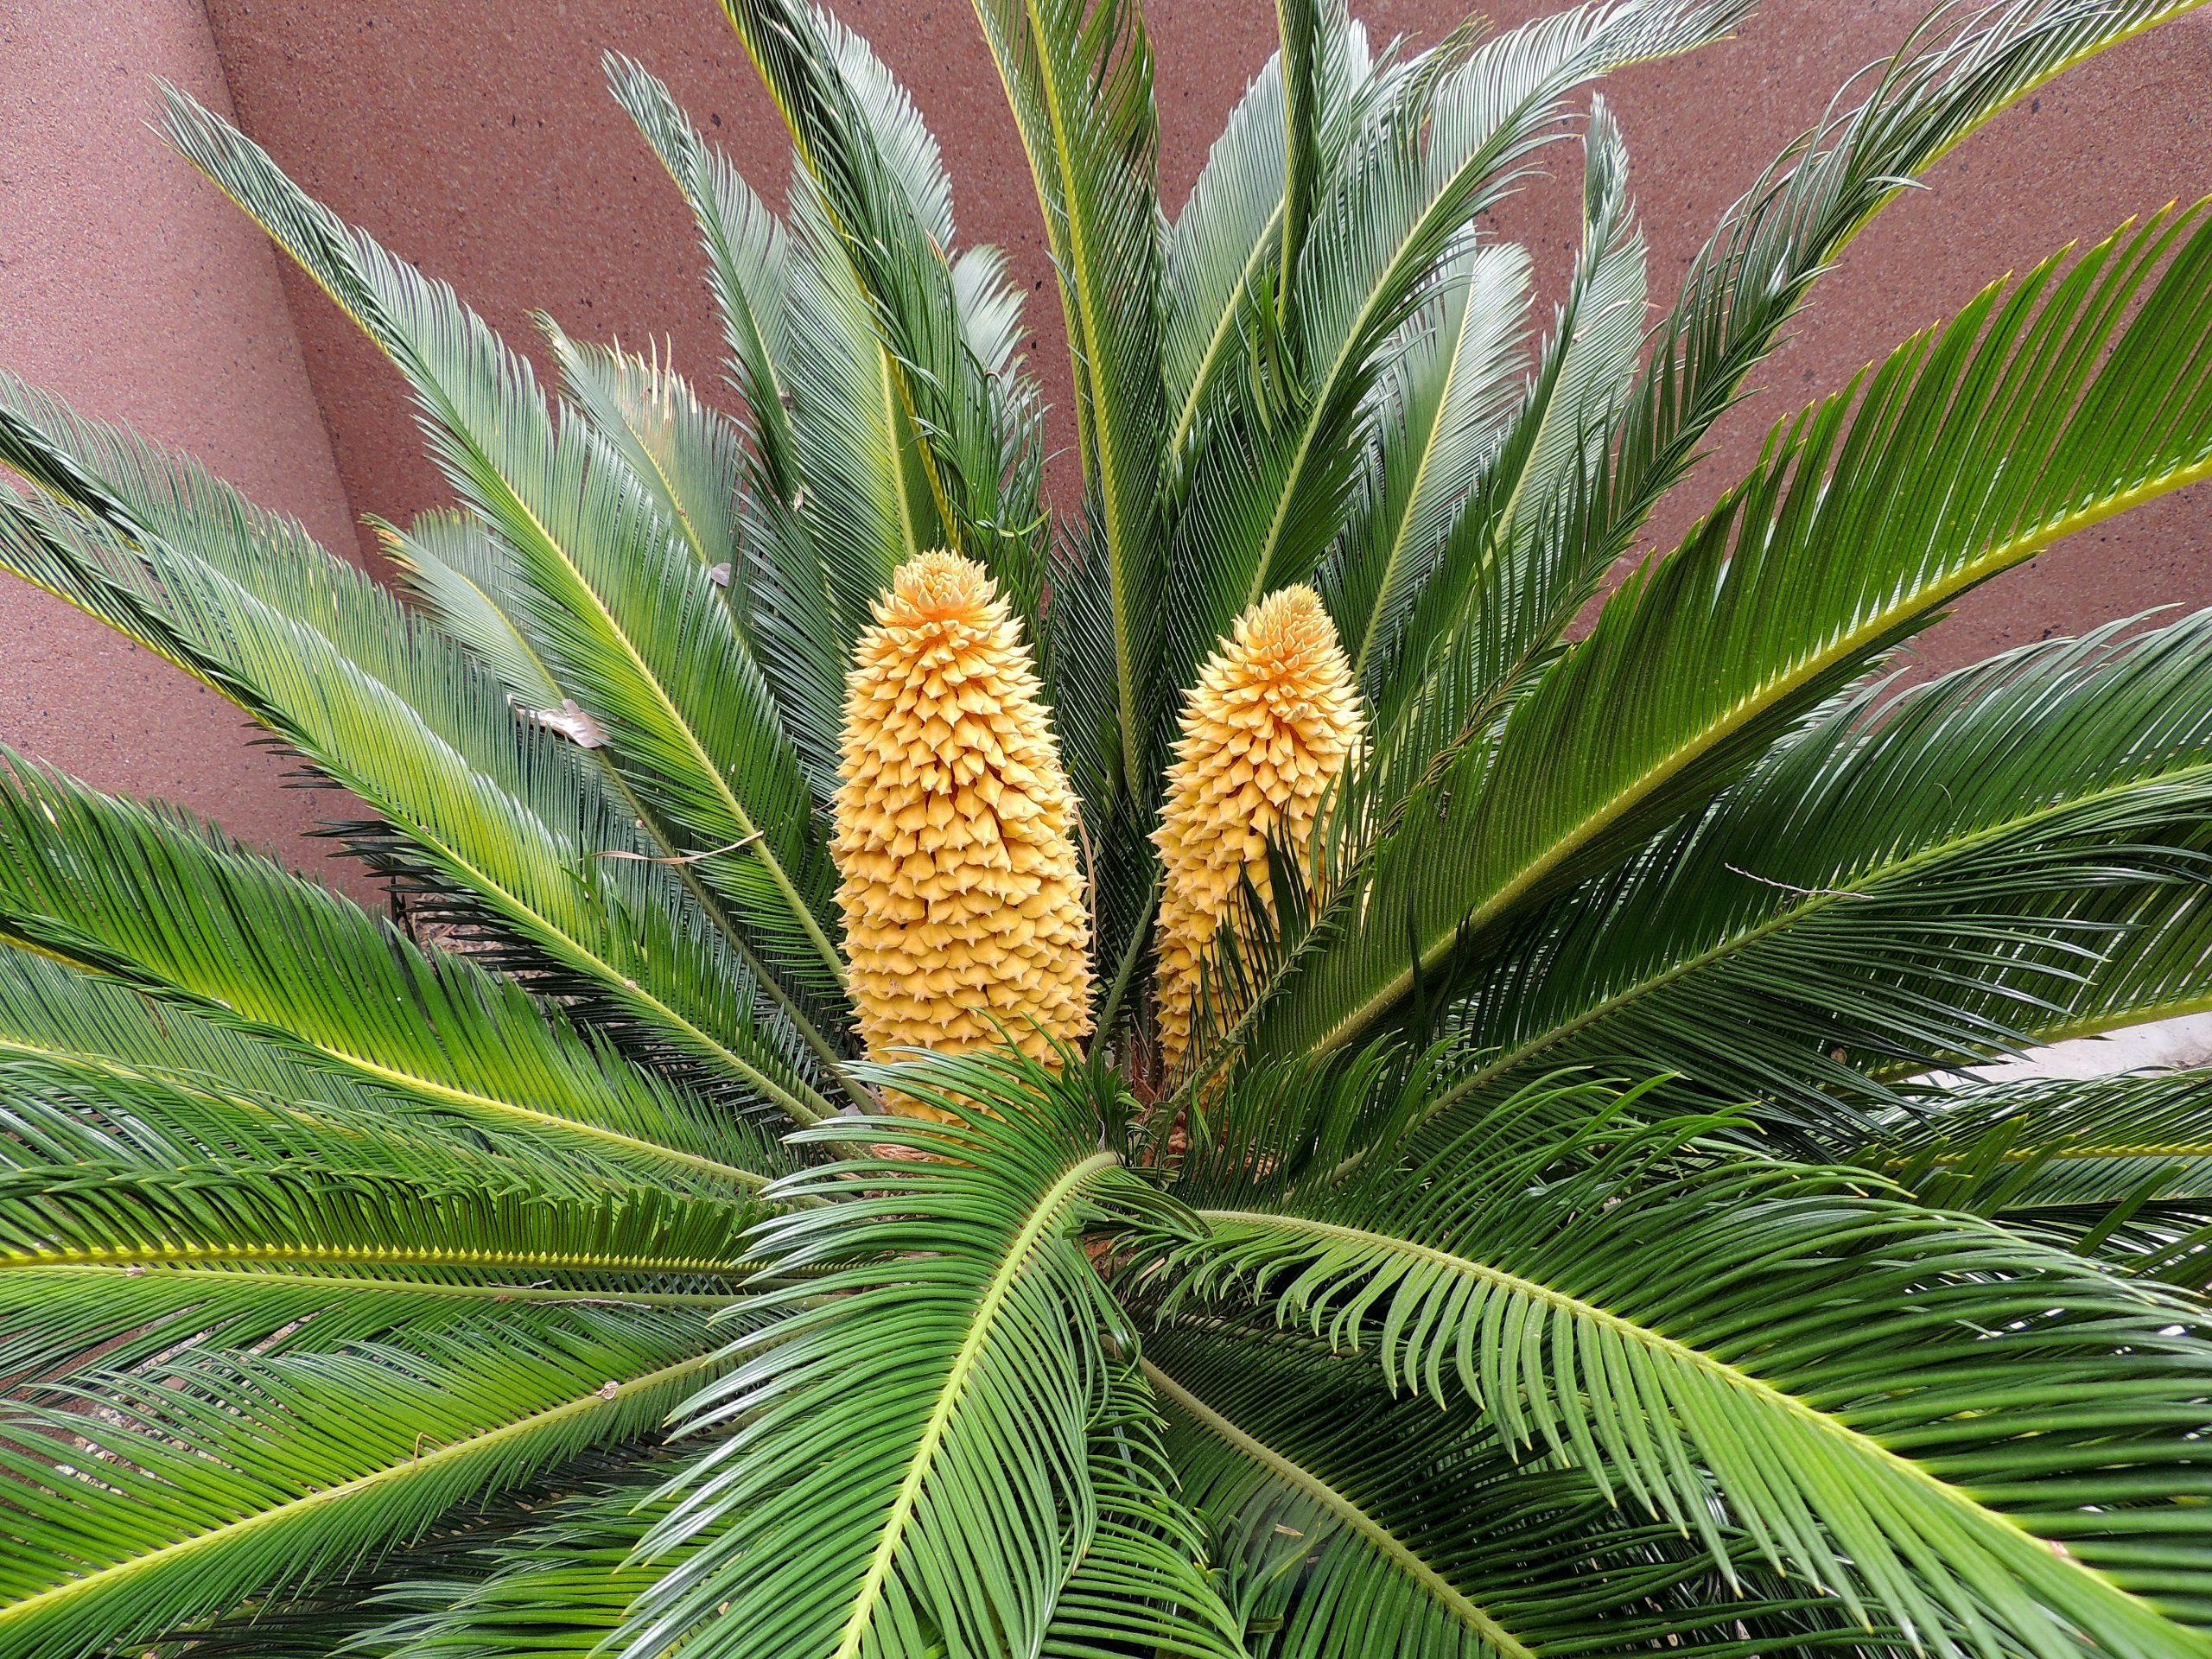 Sago Palm in bloom